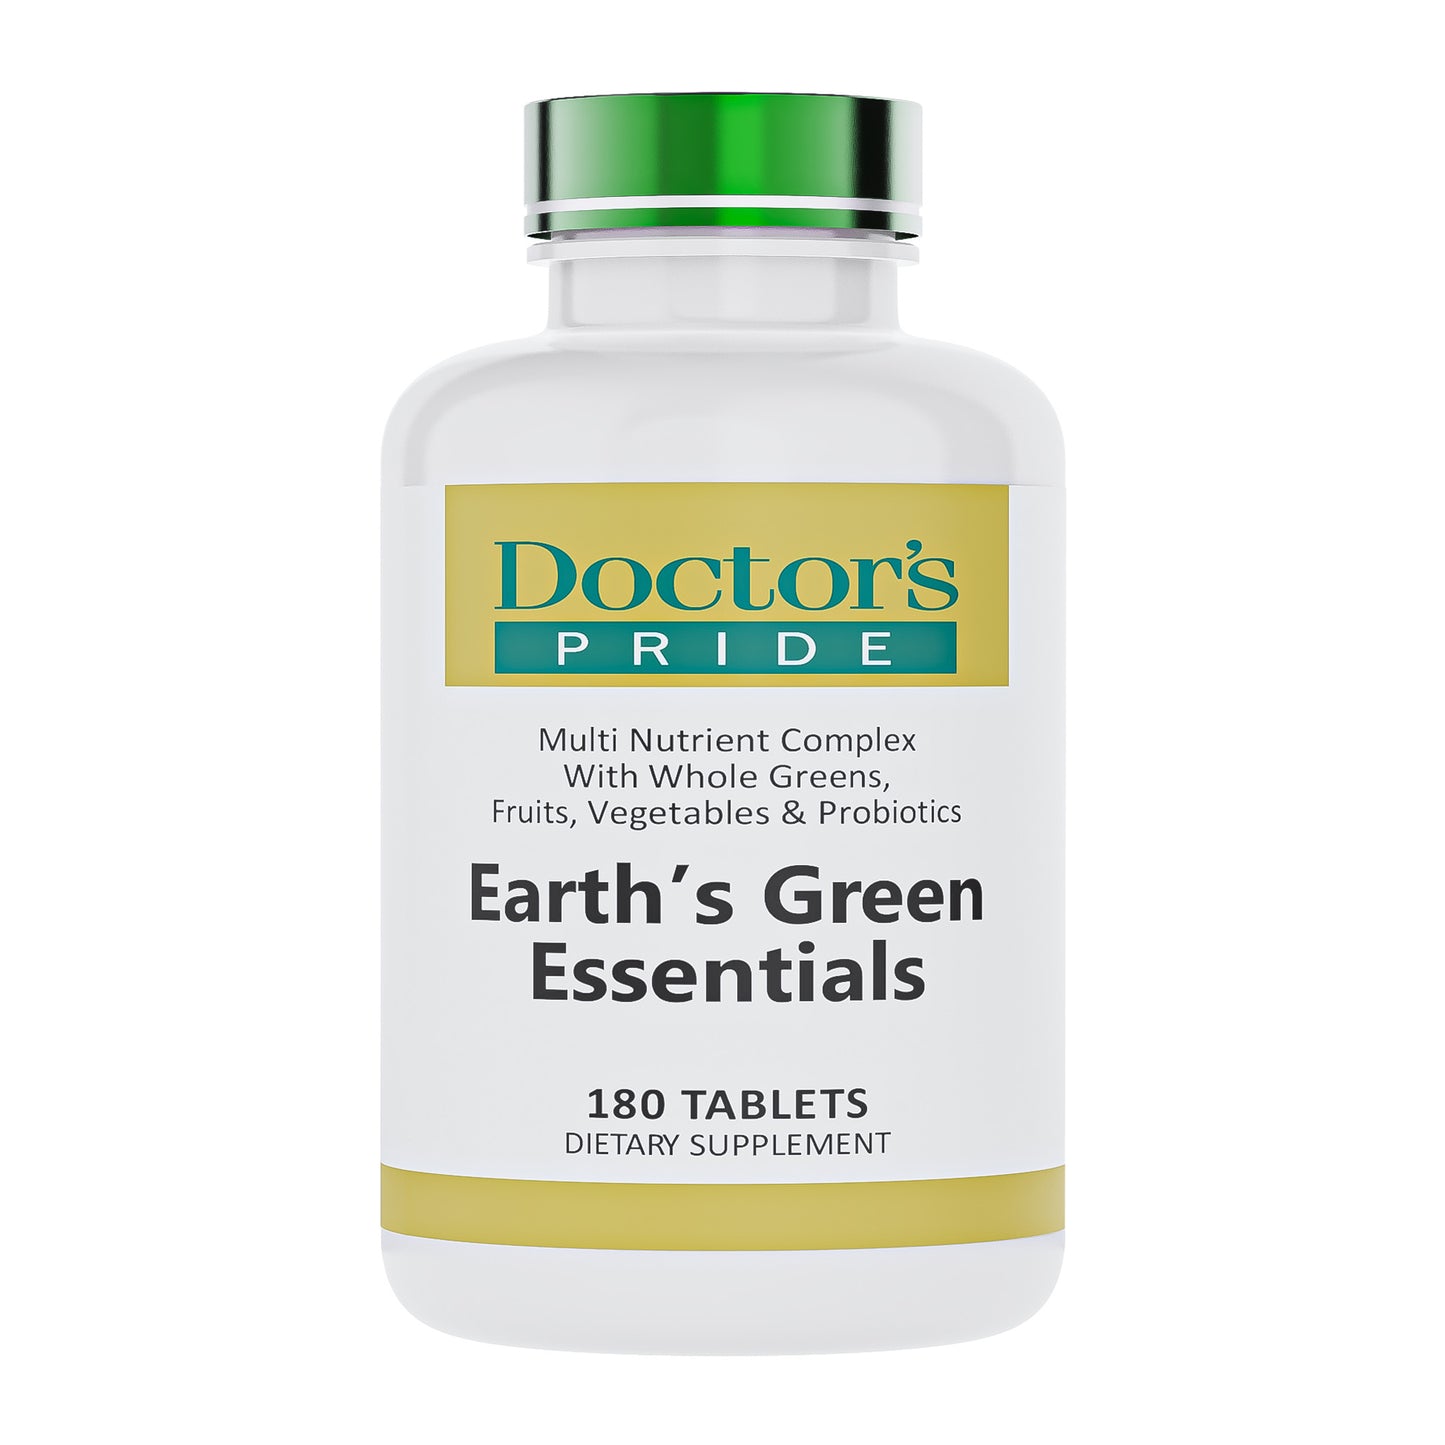 Earth's Green Essentials: A Comprehensive Multivitamin with Vegetables, Fruits, & Probiotics - 180 Tablets